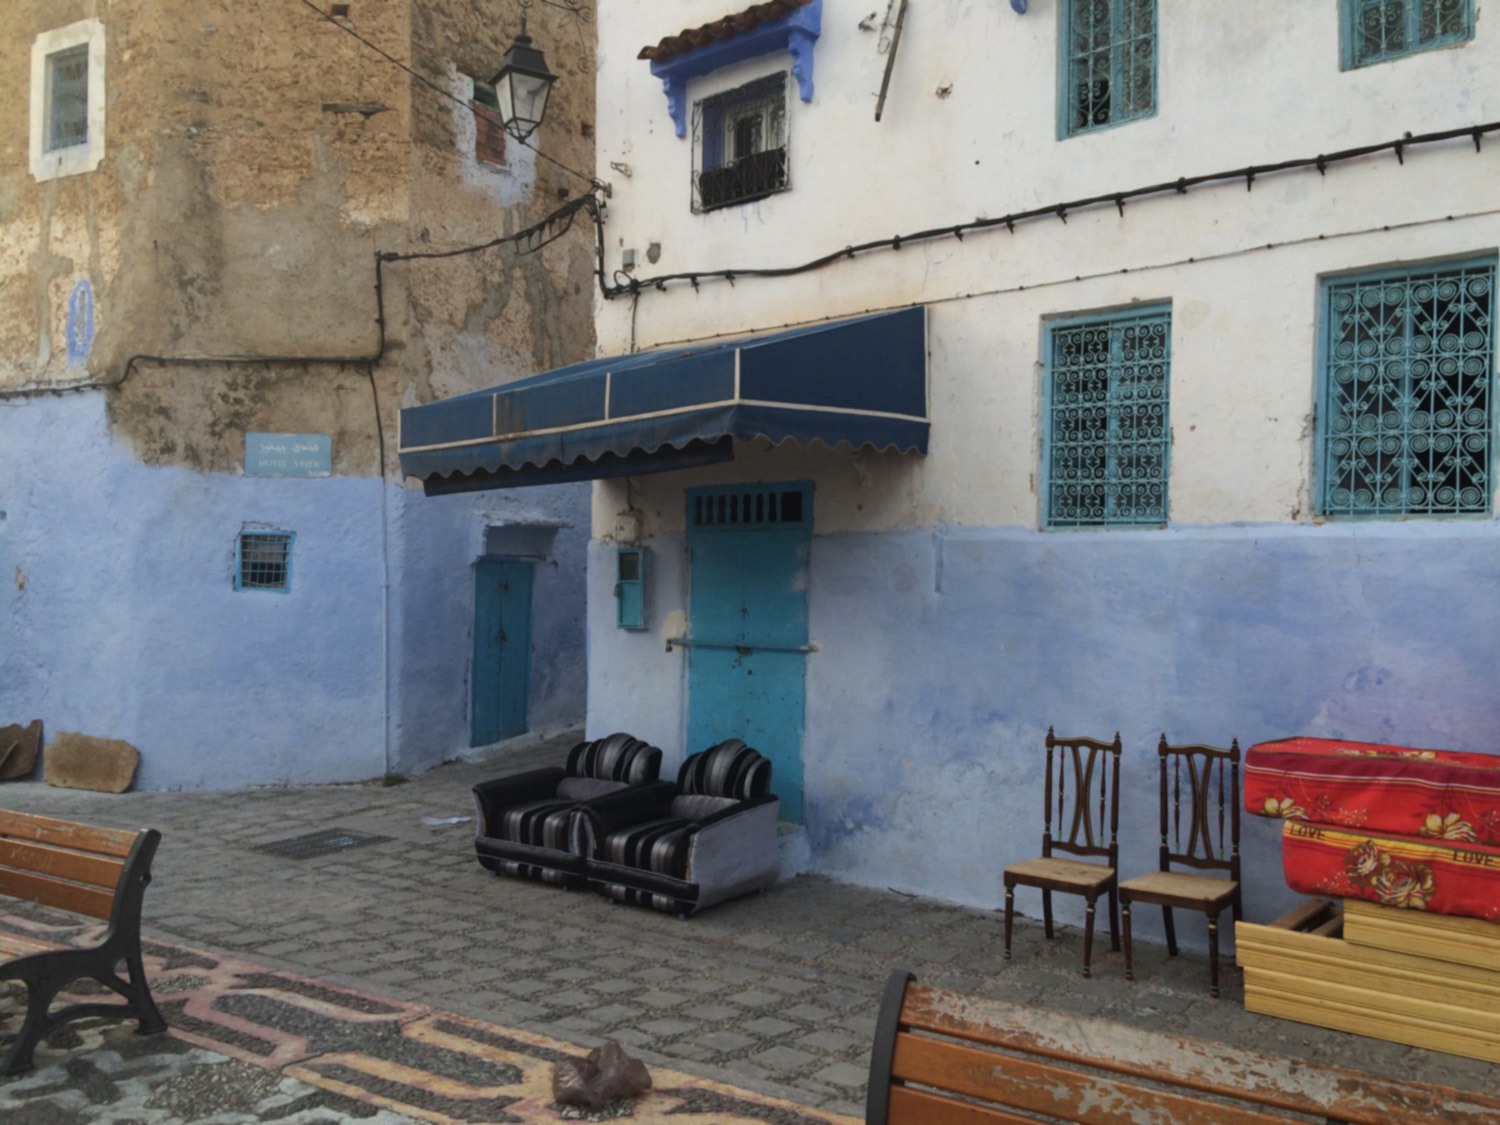 Furniture outside of a closed store on Plaza El Hauta